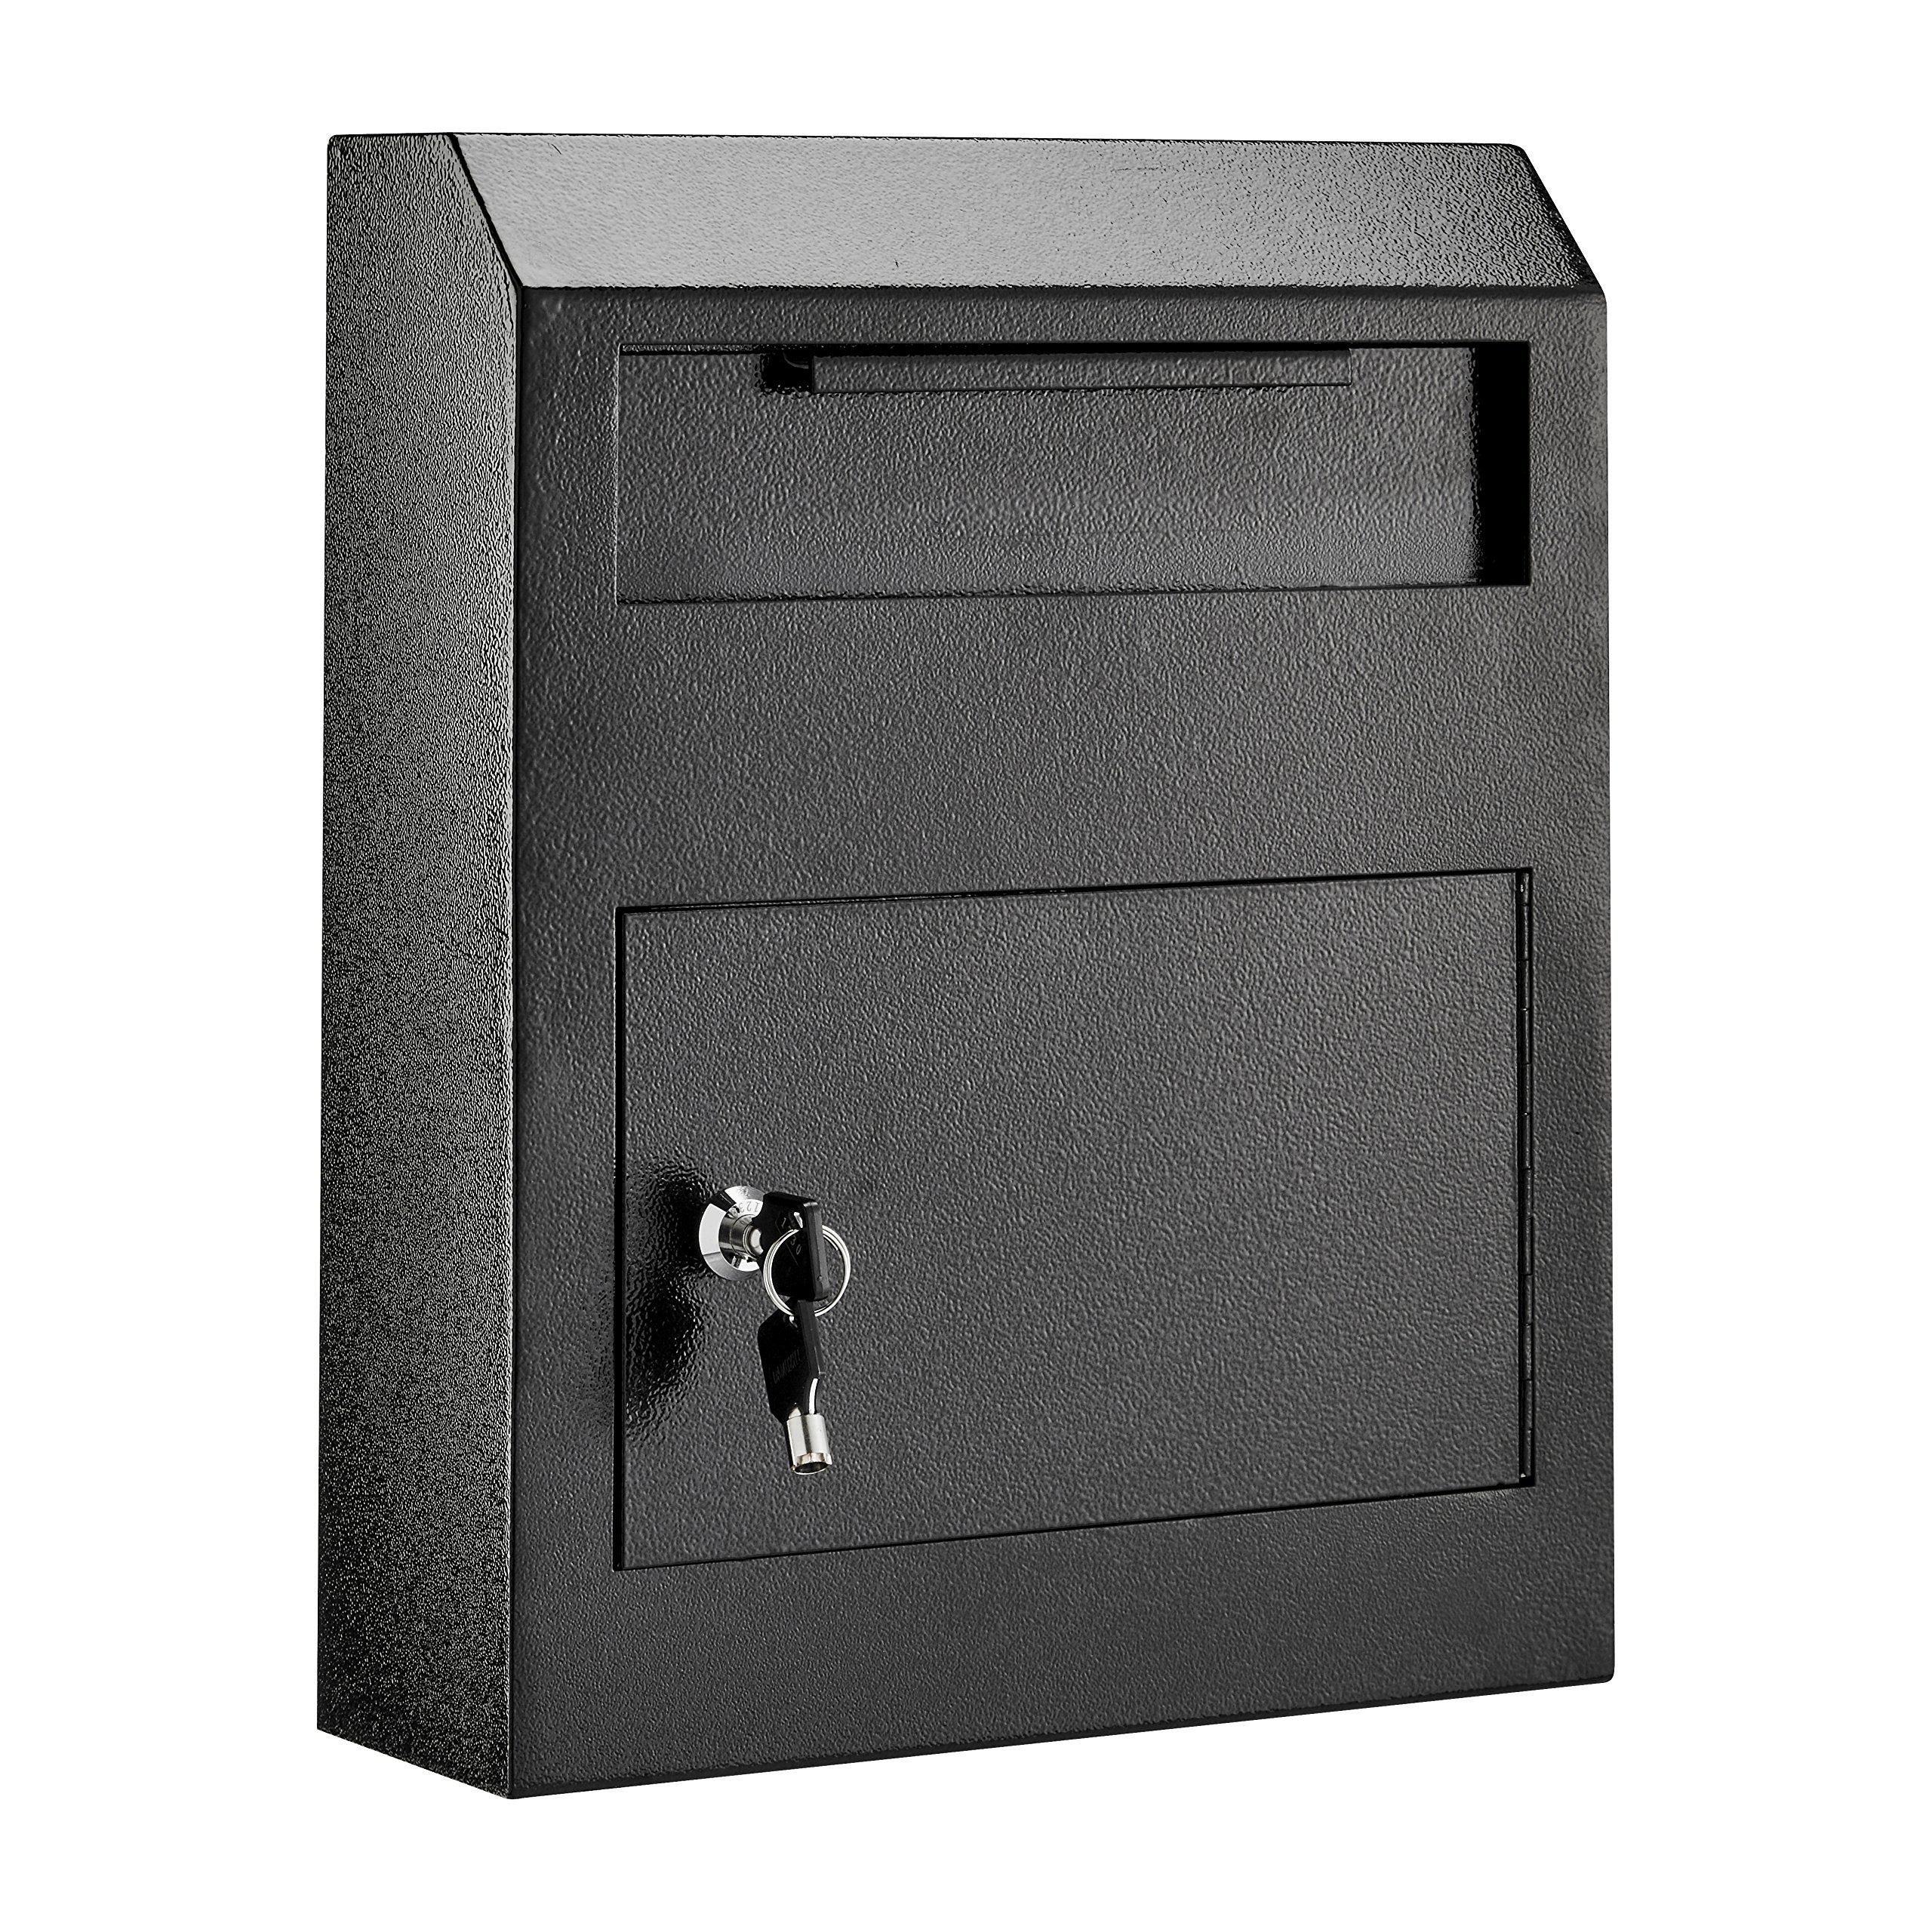 AdirOffice Heavy Duty Secured Safe Drop Box - Suggestion Box - Locking Mailbox - Key Drop Box - Wall Mounted Mail Box - Safe Lock Box - Ballot Box - Donation Box (Black)  - Very Good